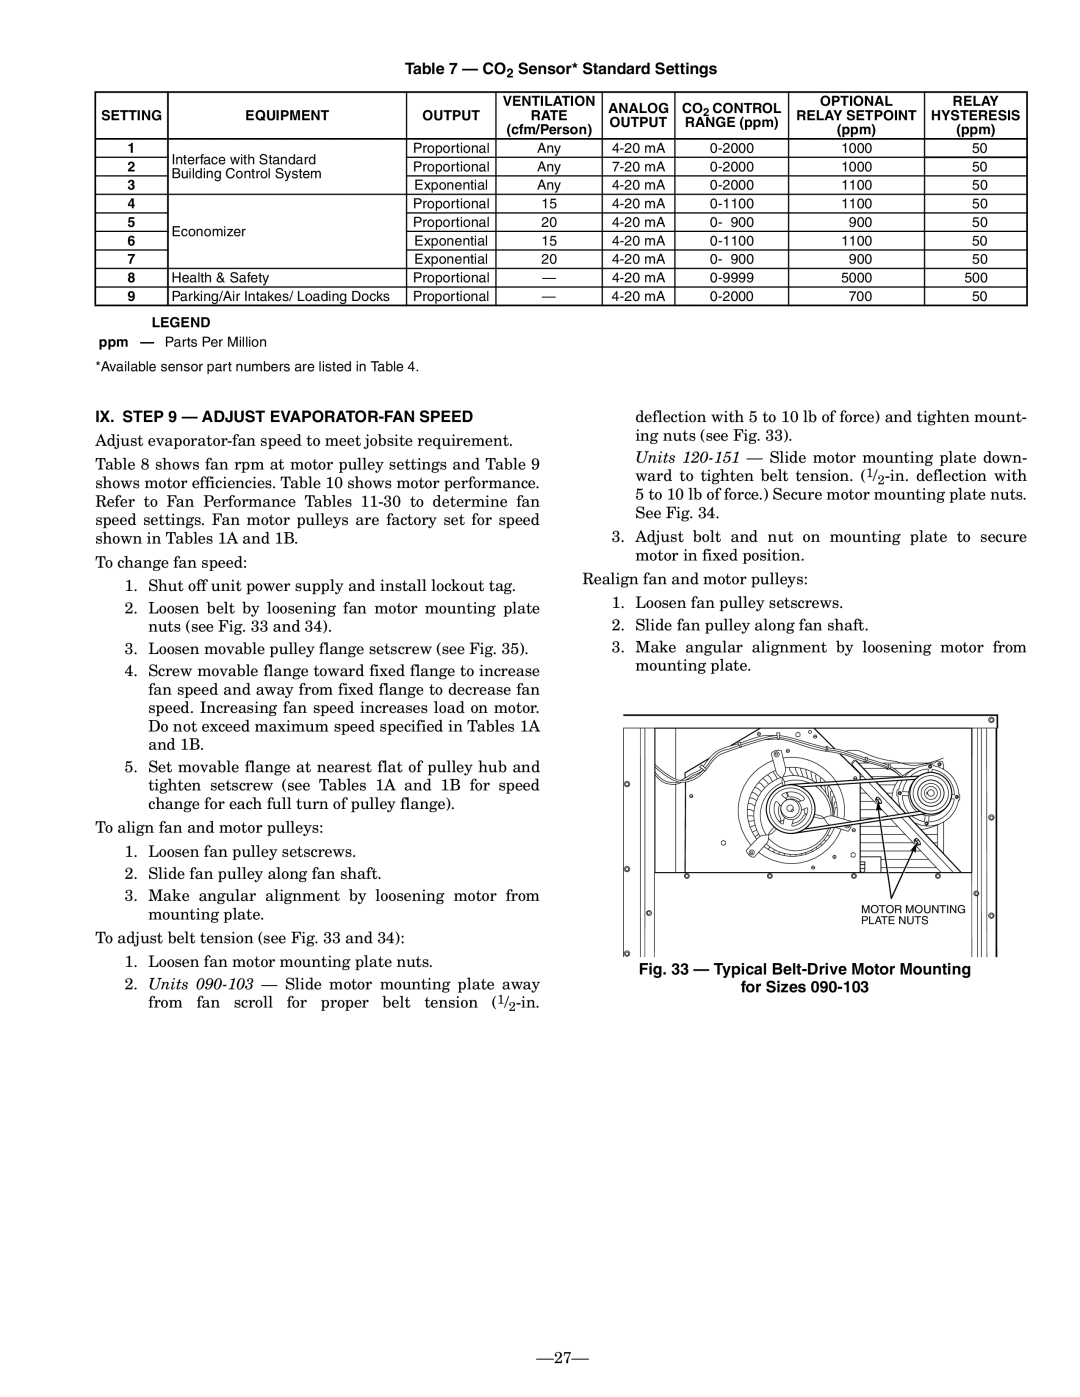 Bryant 580F 27, CO2 Sensor* Standard Settings, Ix. — Adjust Evaporator-Fanspeed, Typical Belt-DriveMotor Mounting 